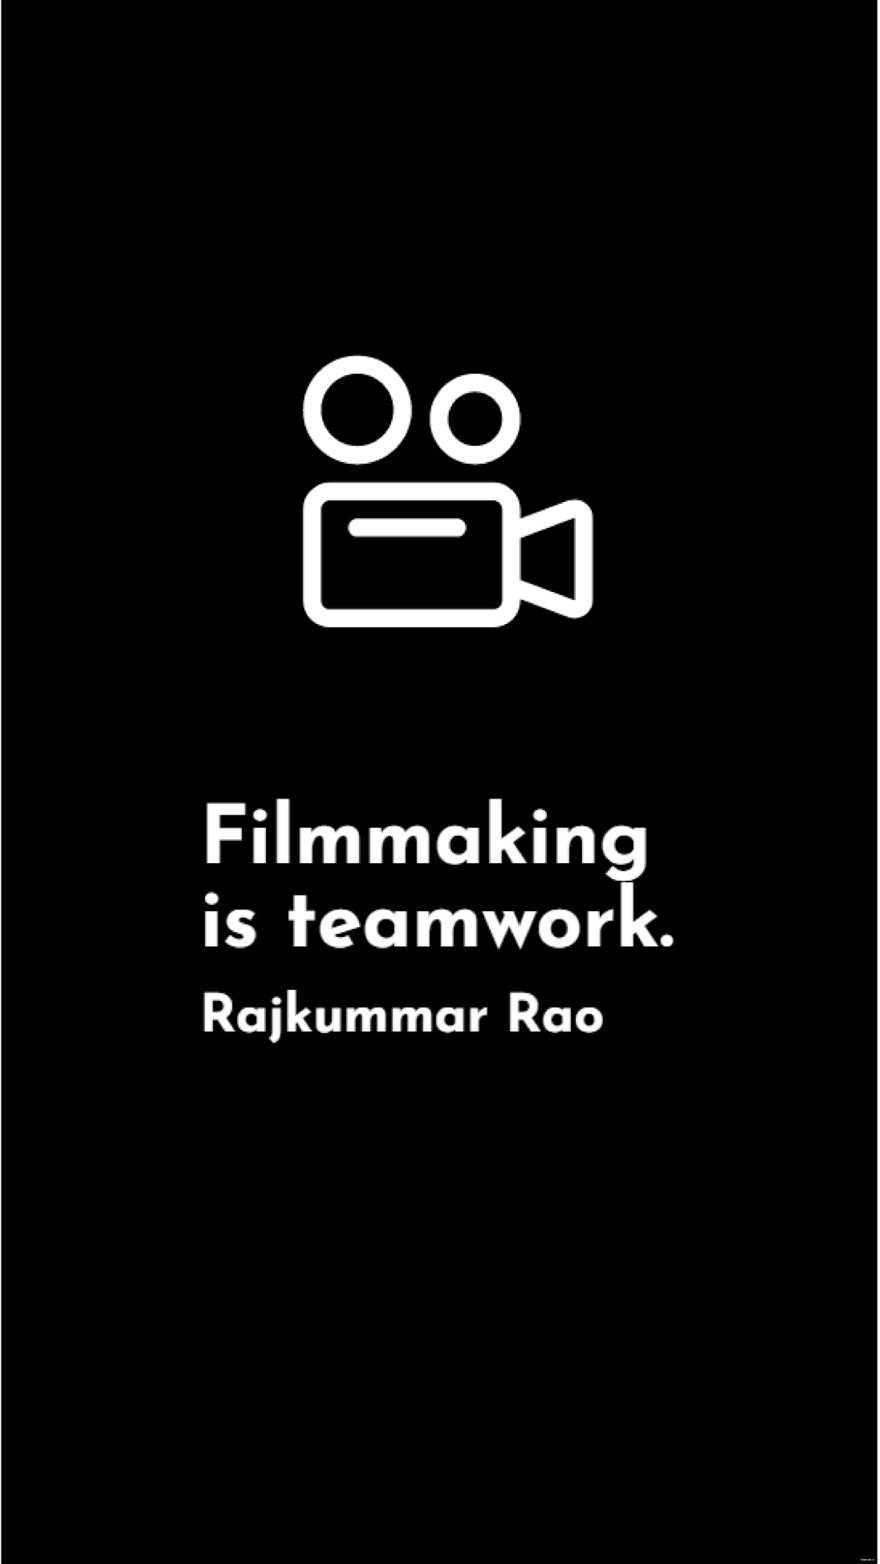 Rajkummar Rao - Filmmaking is teamwork.